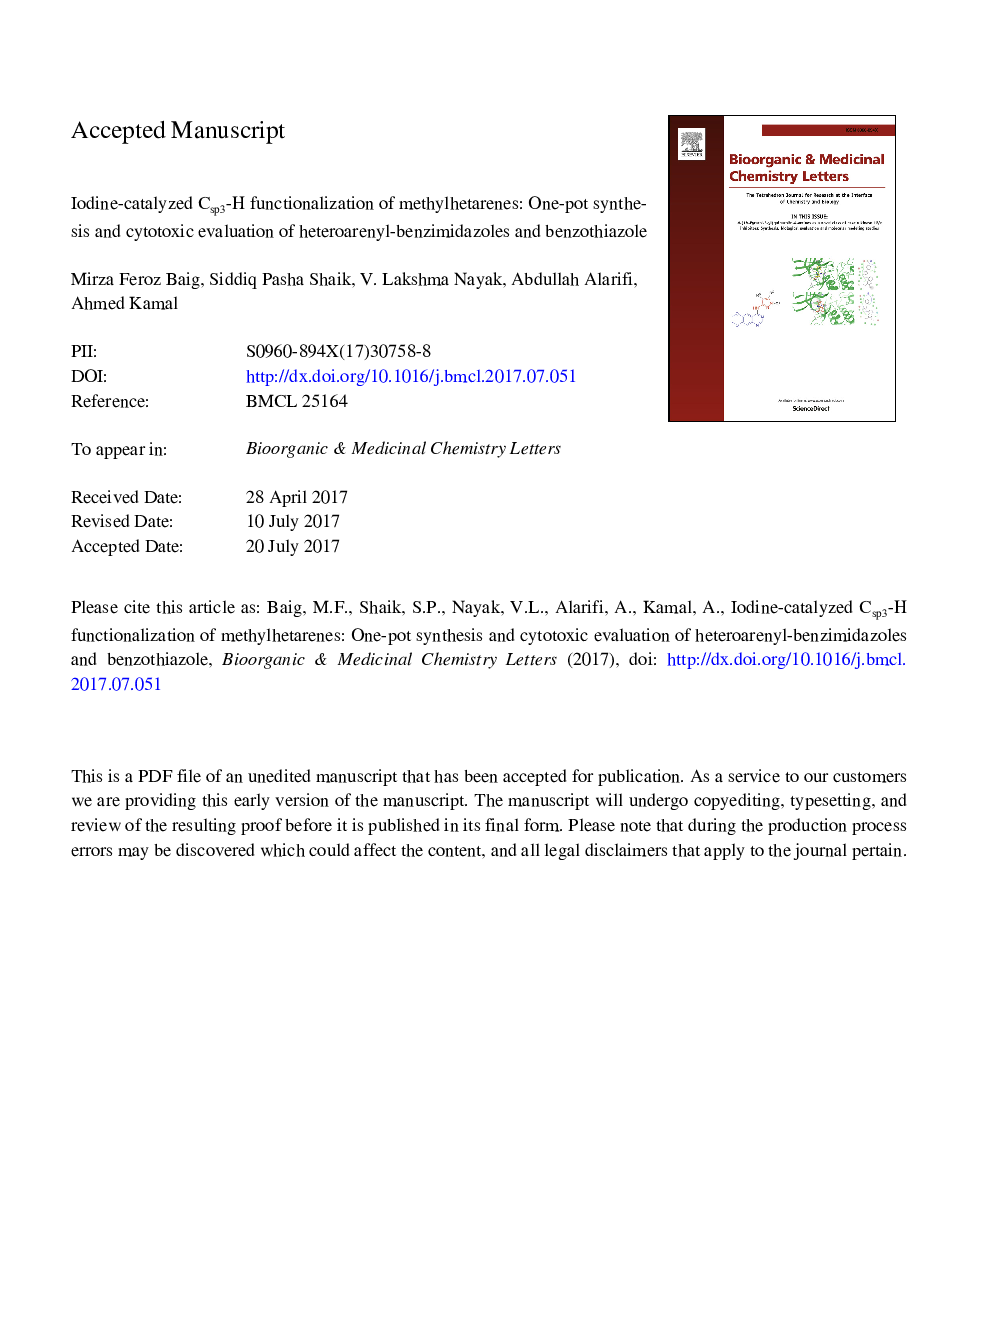 Iodine-catalyzed Csp3-H functionalization of methylhetarenes: One-pot synthesis and cytotoxic evaluation of heteroarenyl-benzimidazoles and benzothiazole